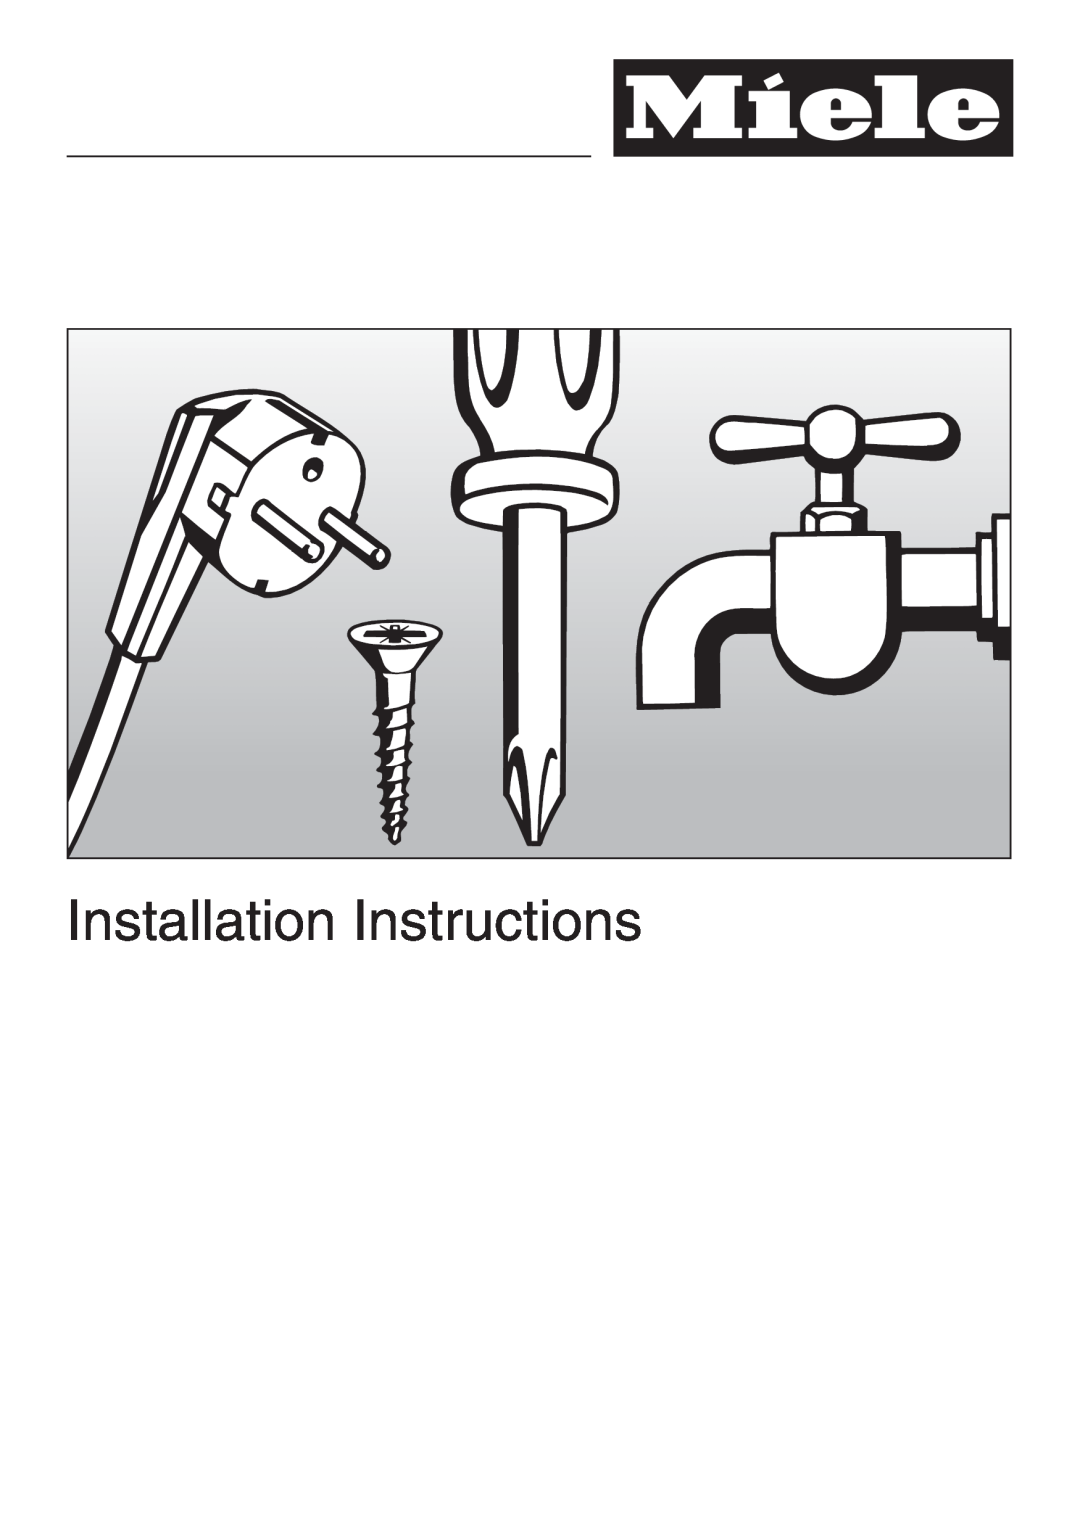 Miele DA362-110 installation instructions Installation Instructions 